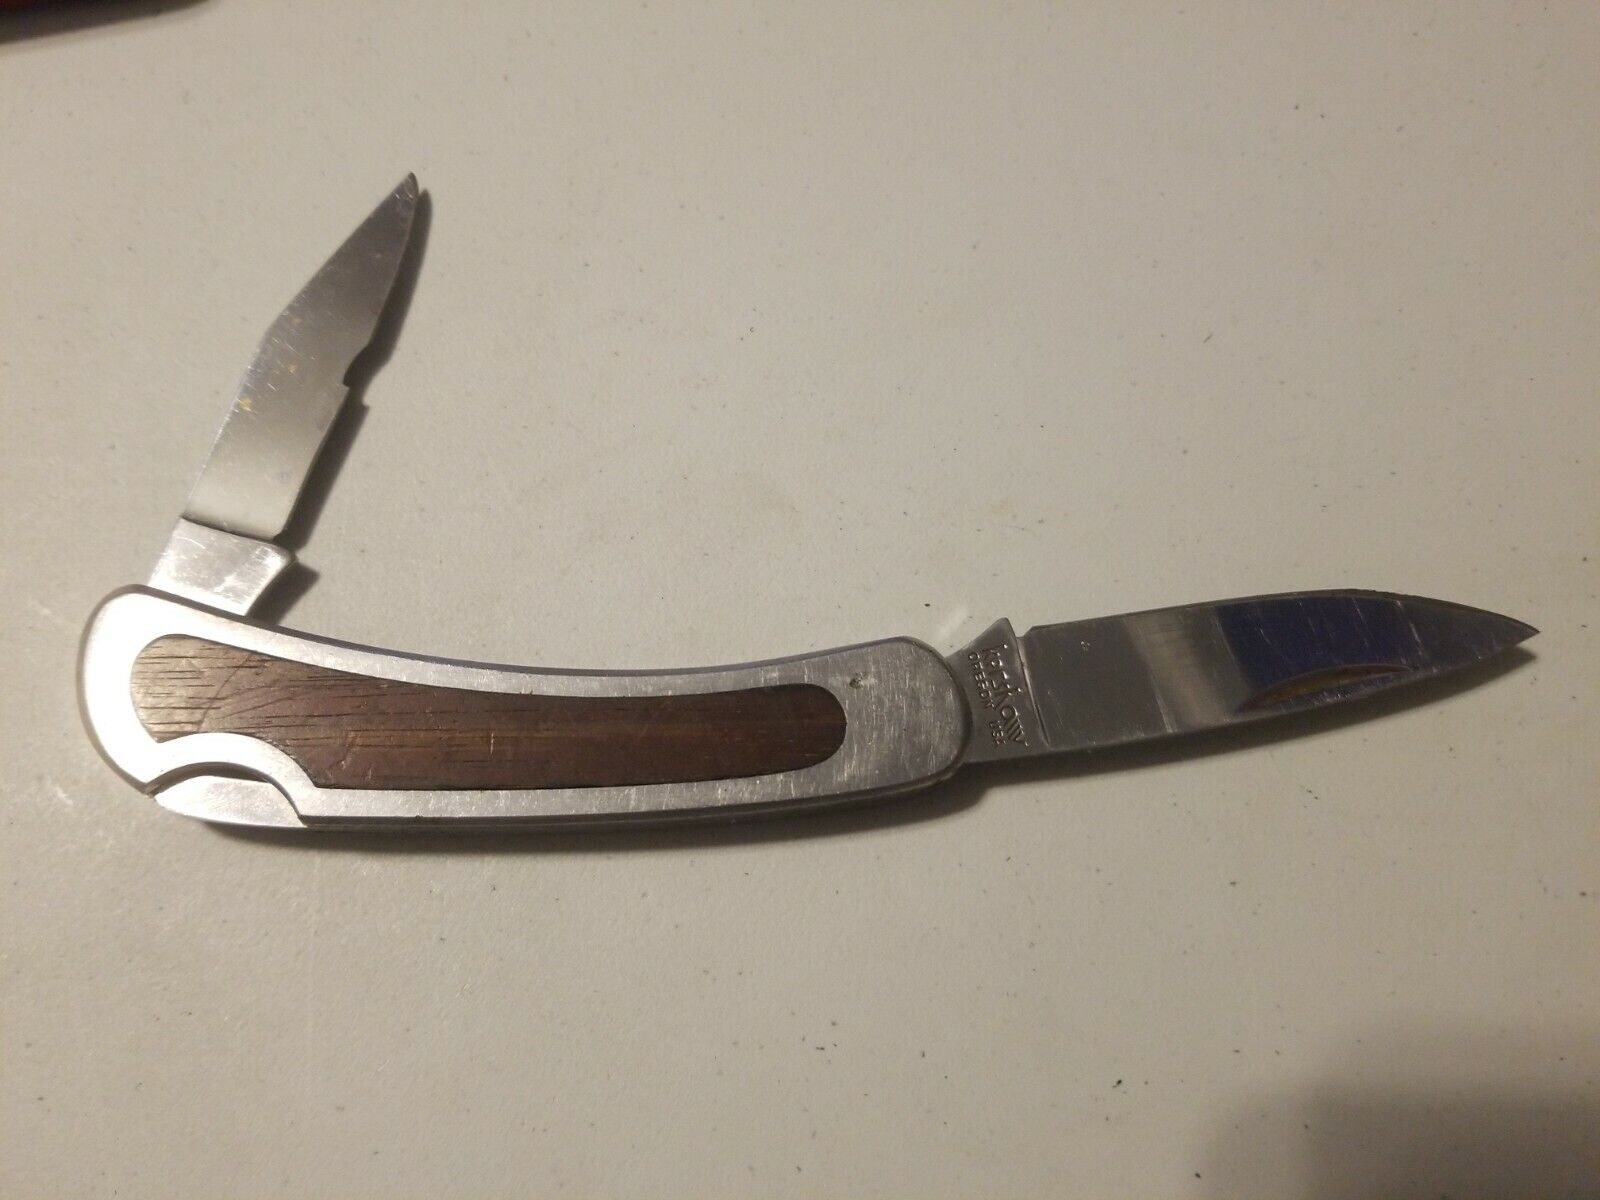  USED KERSHAW MODEL 2050 KAI JAPAN RANCHER FOLDING KNIFE